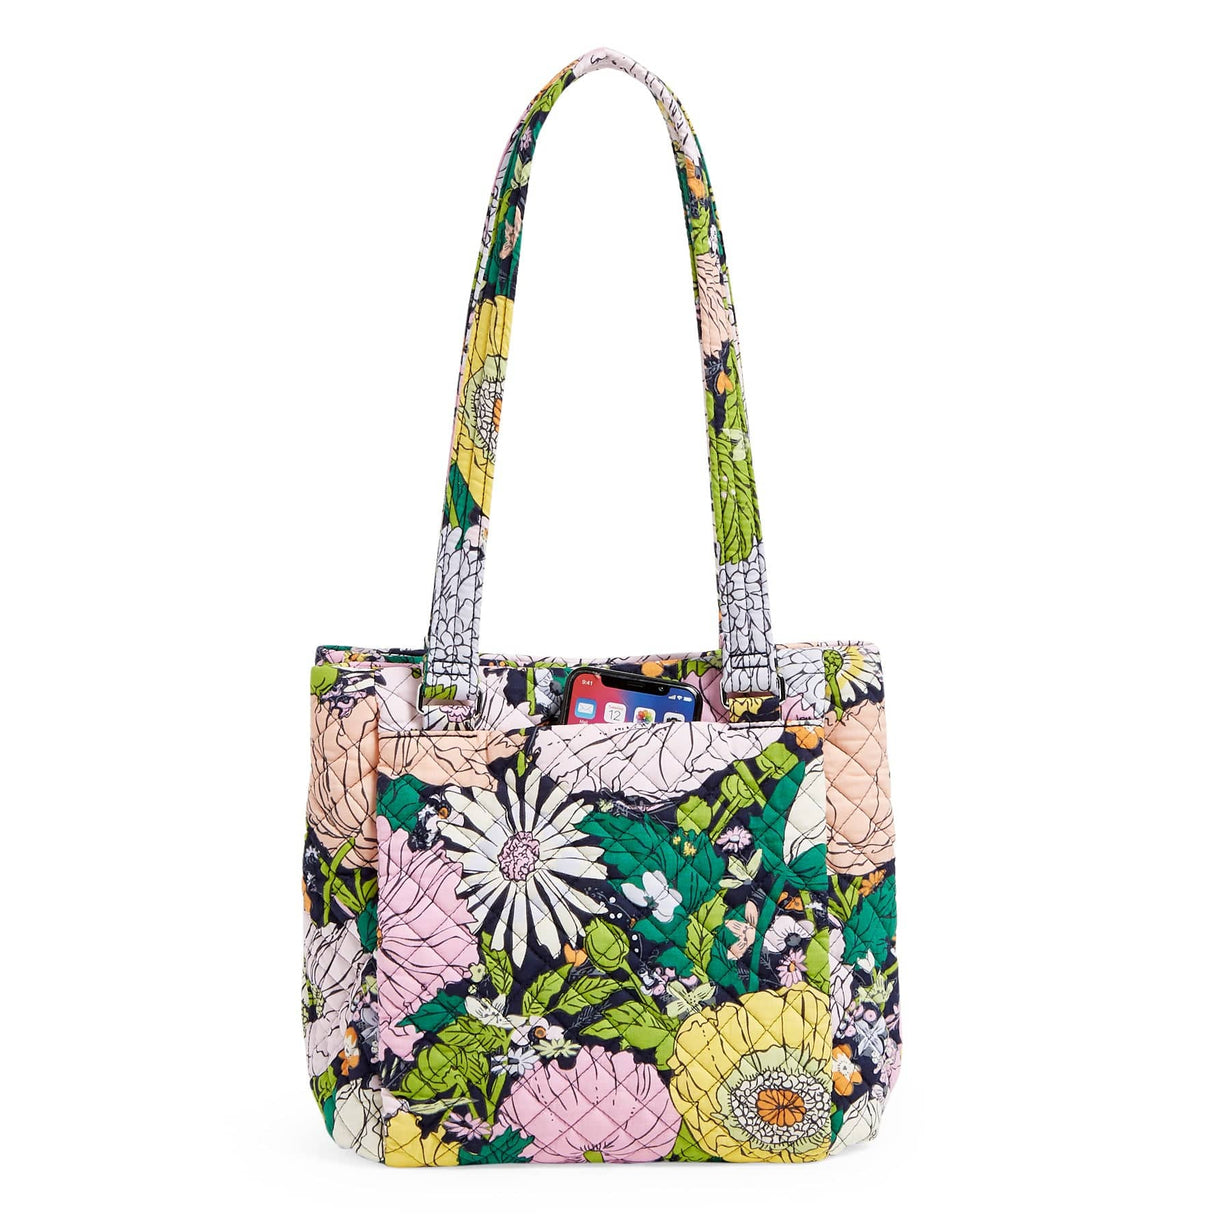 Multi Pocket Nylon Totes Handbag Large Shoulder Bag Travel Purse Bags For  Women (Black): Handbags: Amazon.com